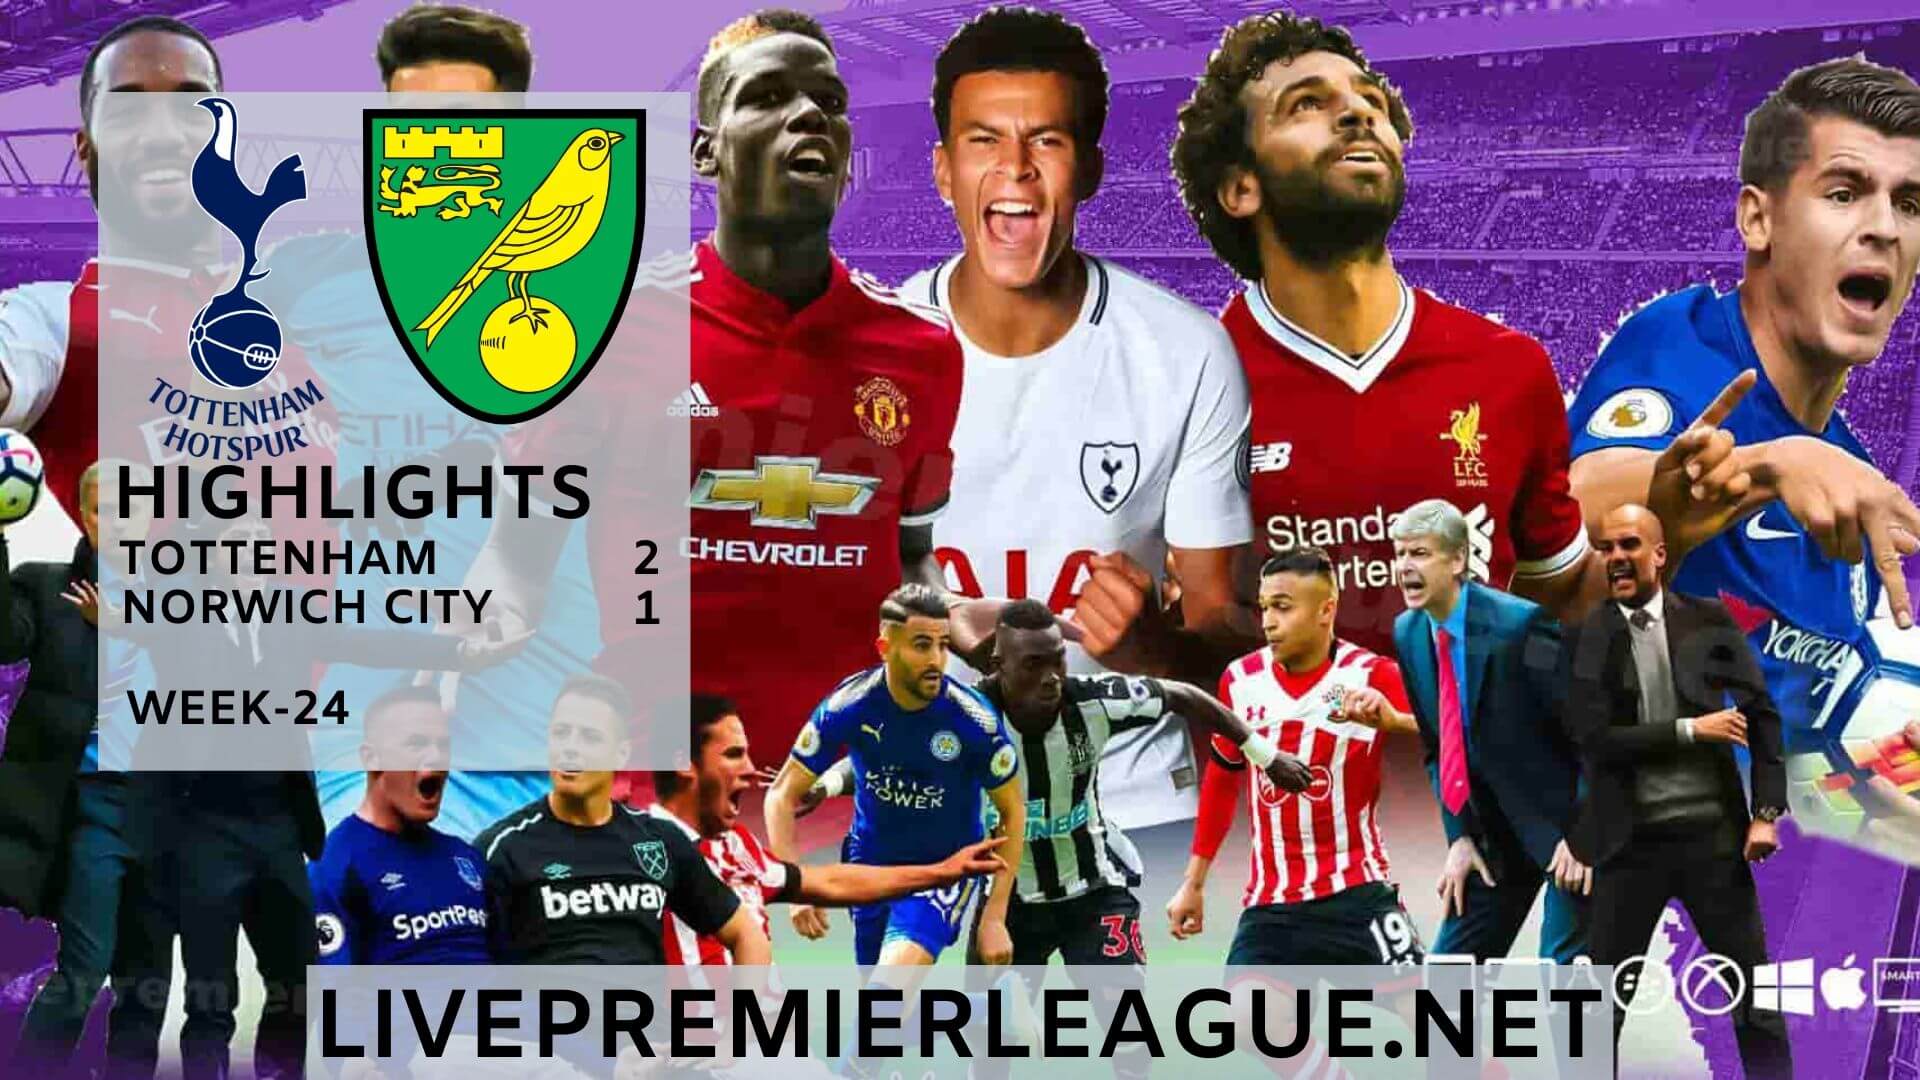 Tottenham Hotspur Vs Norwich City Highlights 2020 Week 24